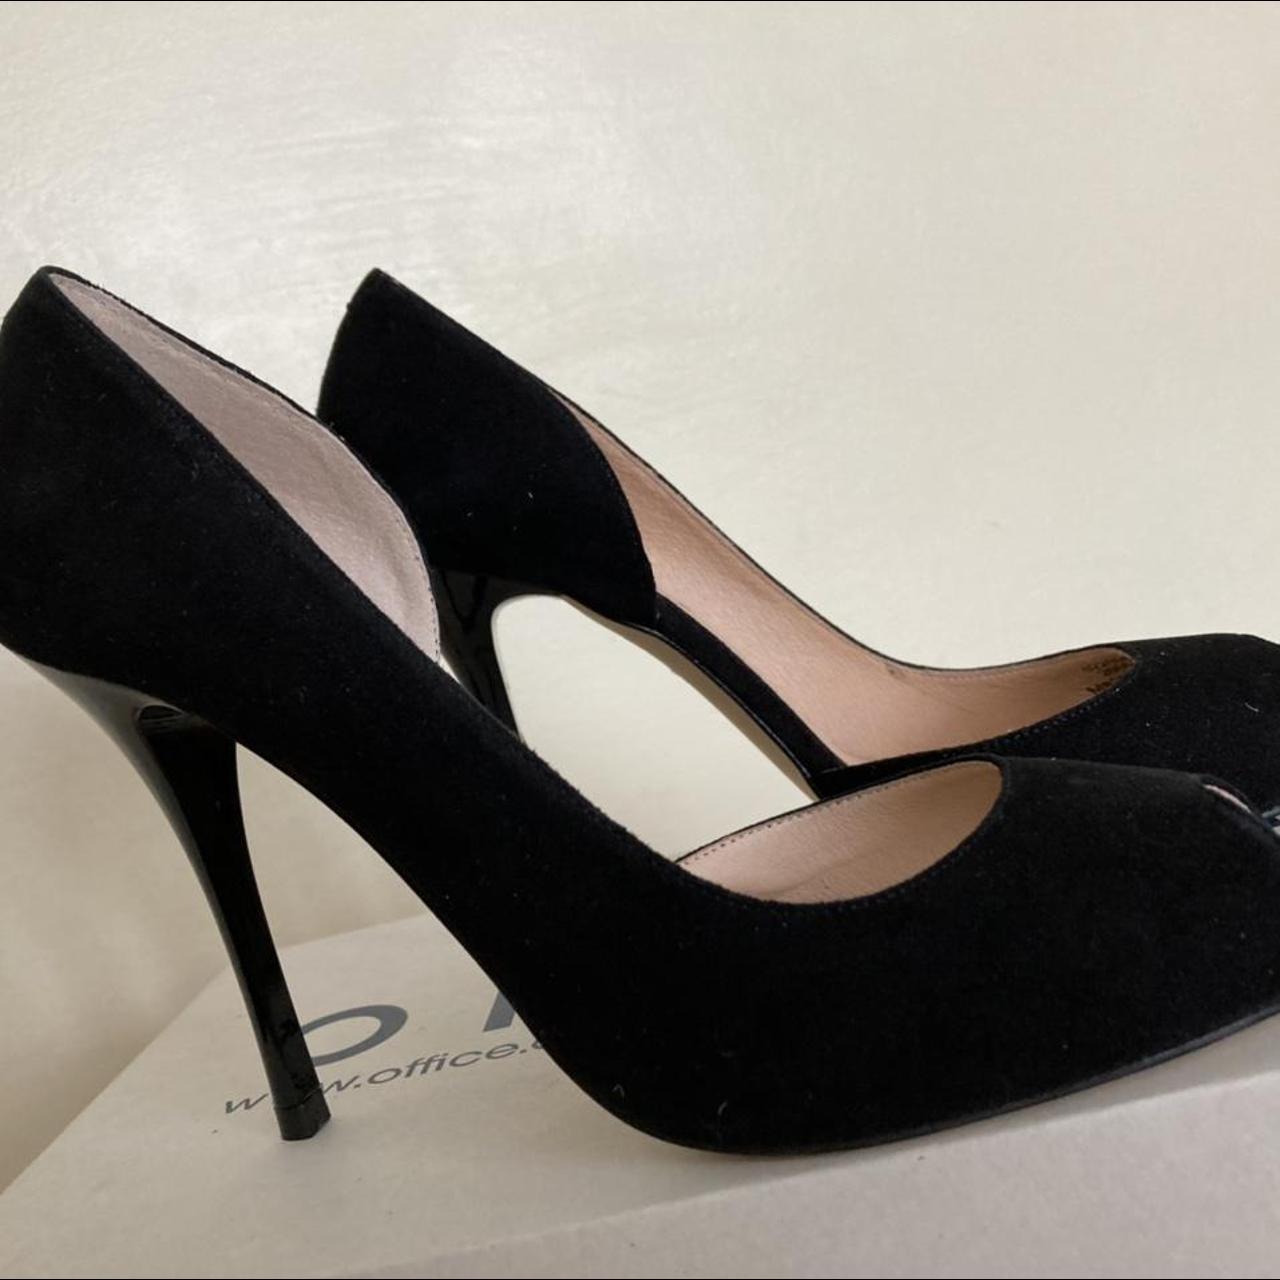 Office high heeled stiletto black peep toe with... - Depop